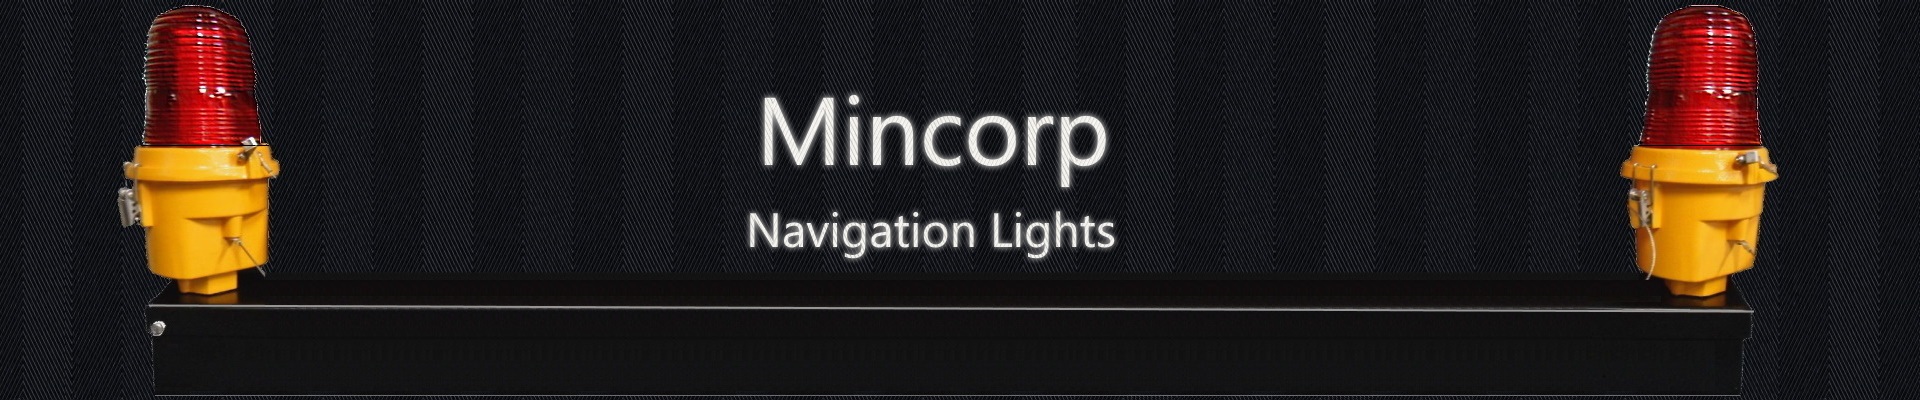 Mincorp Navigation Lights